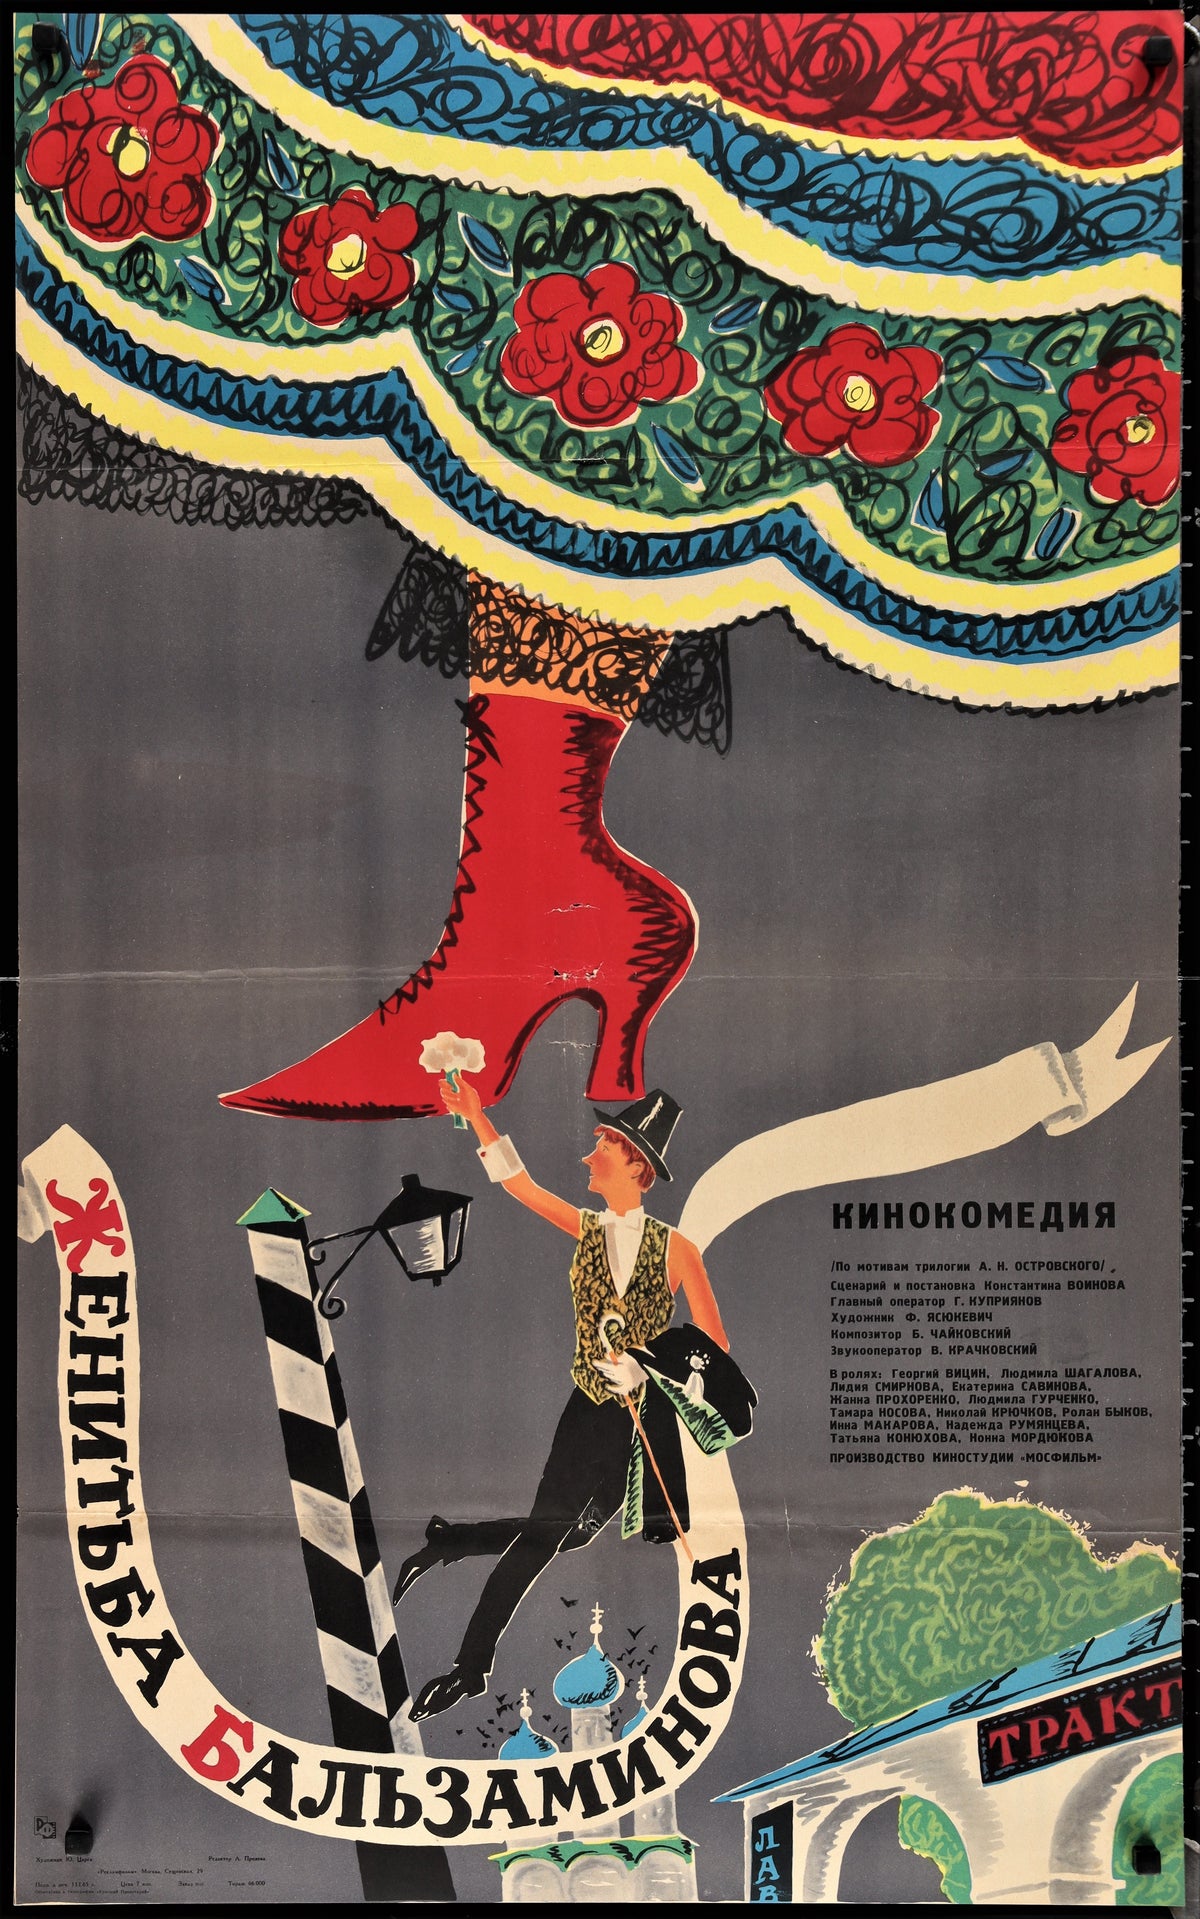 Marriage of Balzaminov - Authentic Vintage Poster